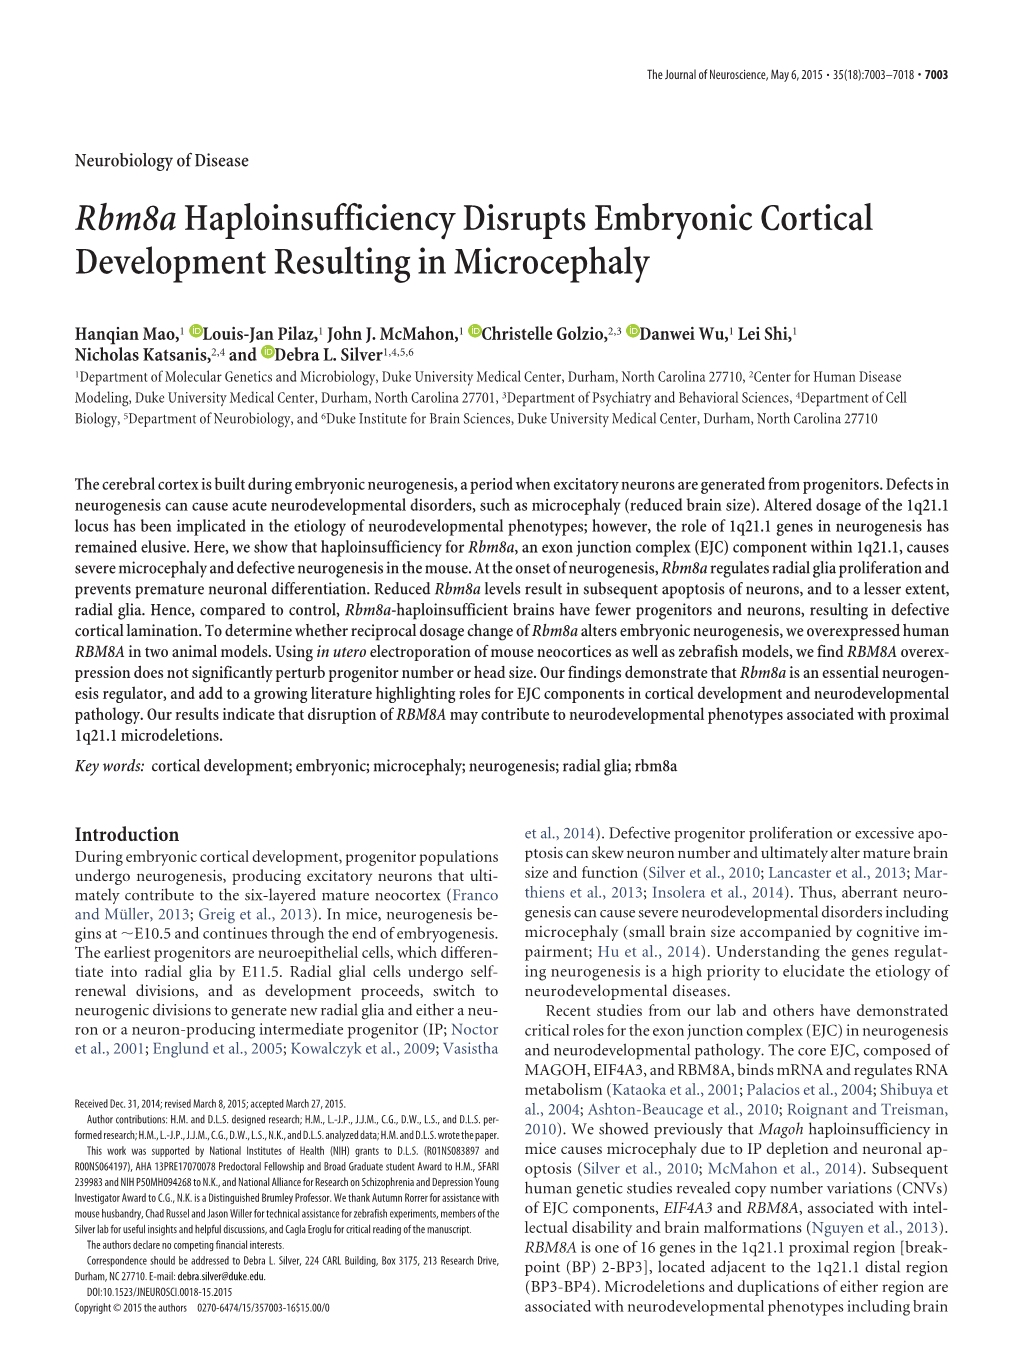 Rbm8ahaploinsufficiency Disrupts Embryonic Cortical Development